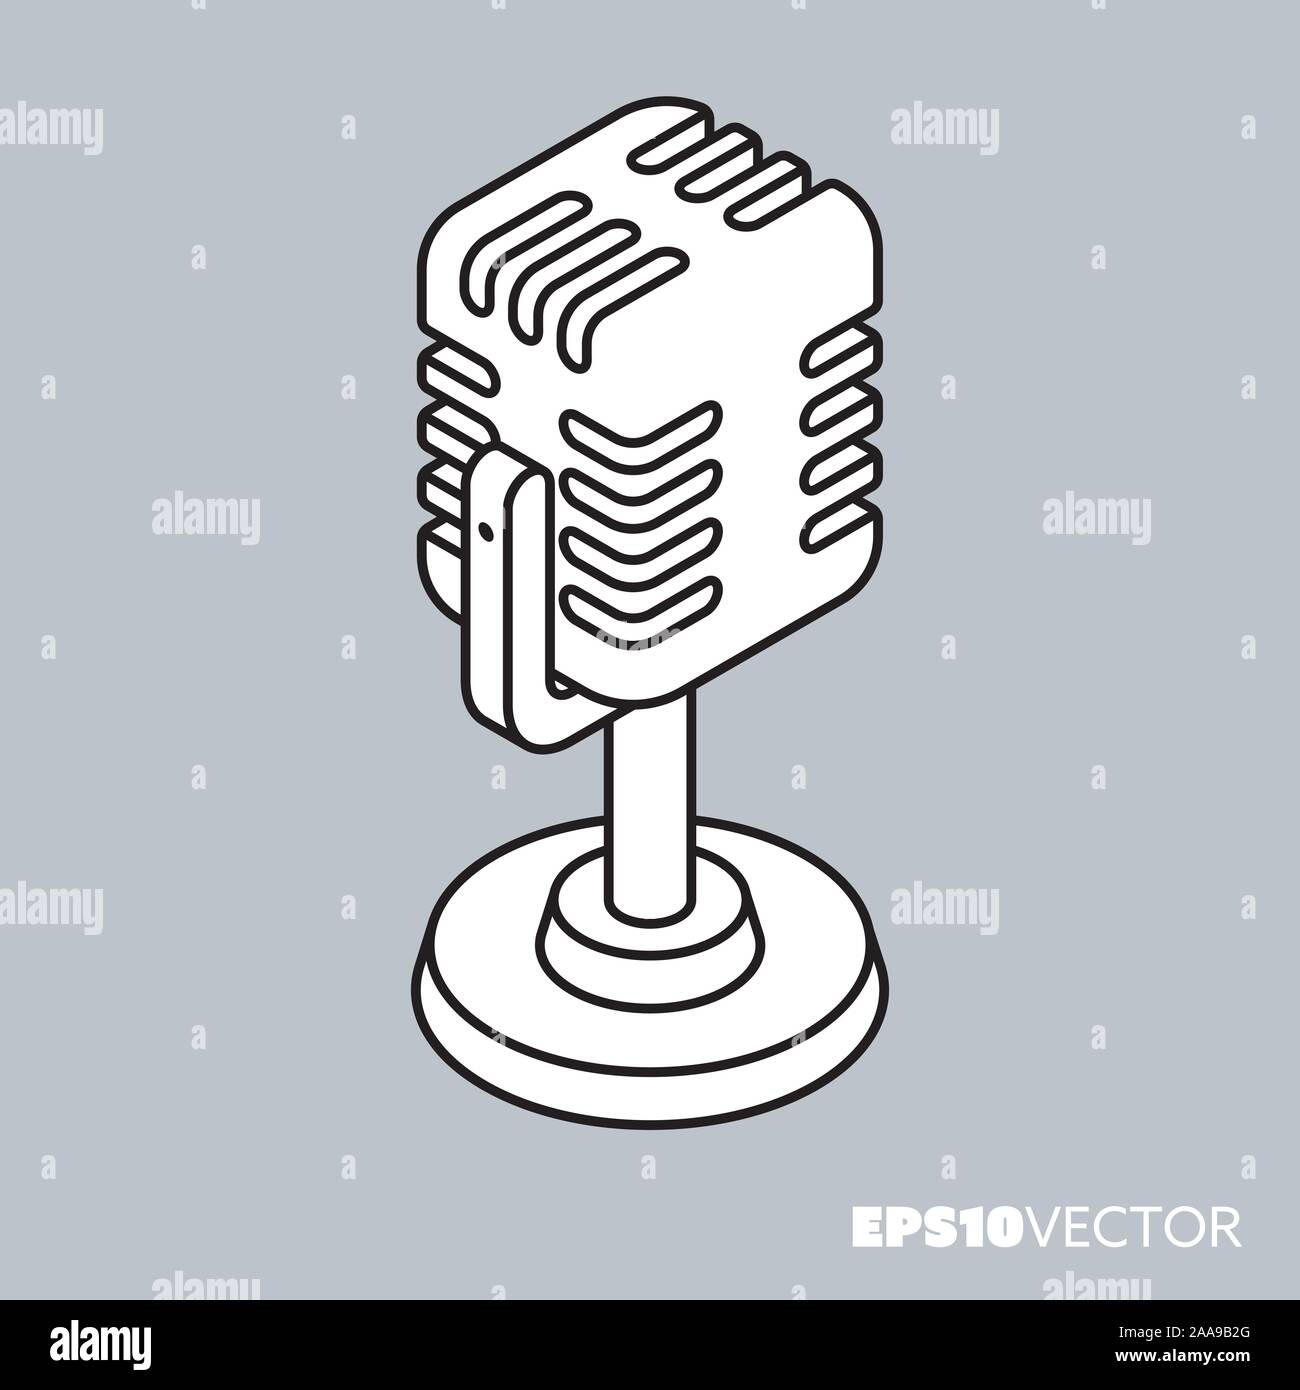 Retro studio microphone icon, outline symbol. Broadcasting, media and communication concept vector illustration. Stock Vector